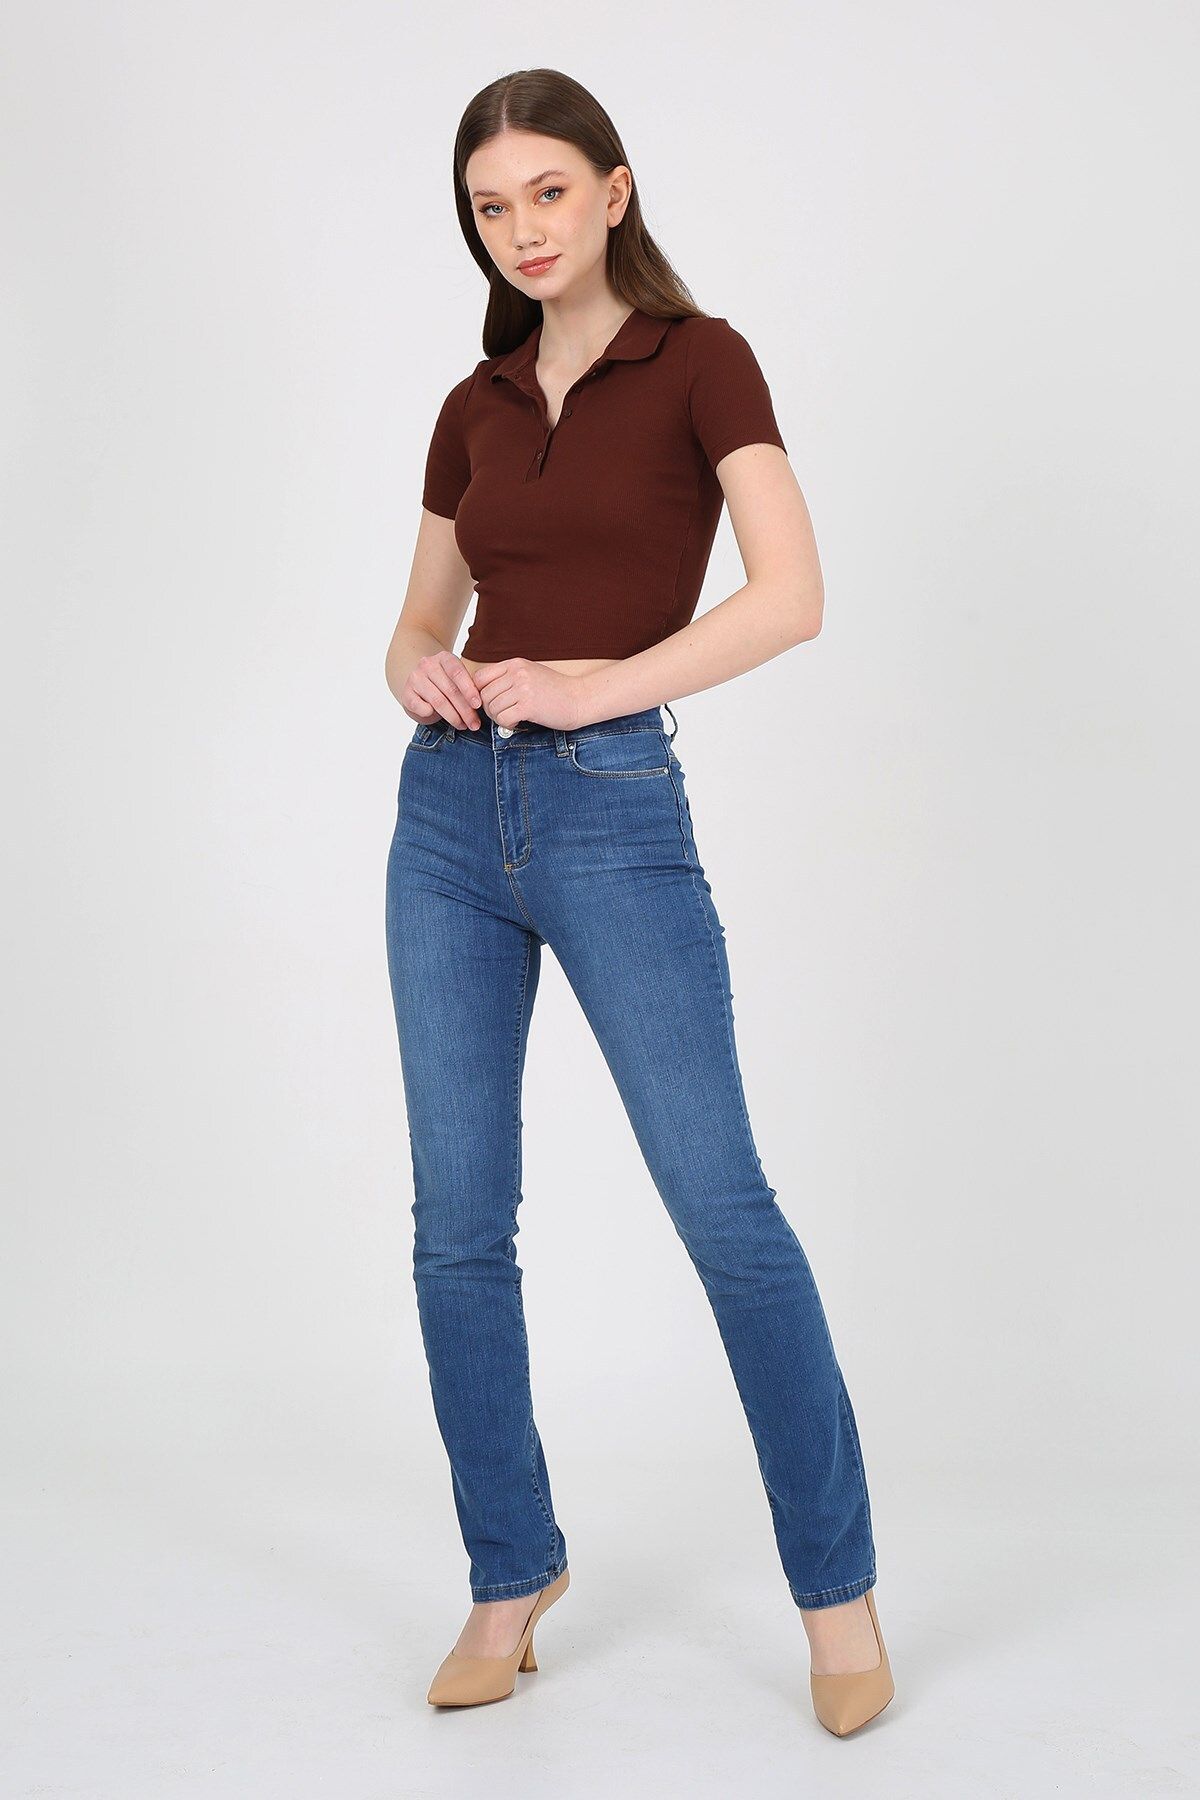 Twister Jeans Kadın Pantolon Marta 9269-15 Light Blue